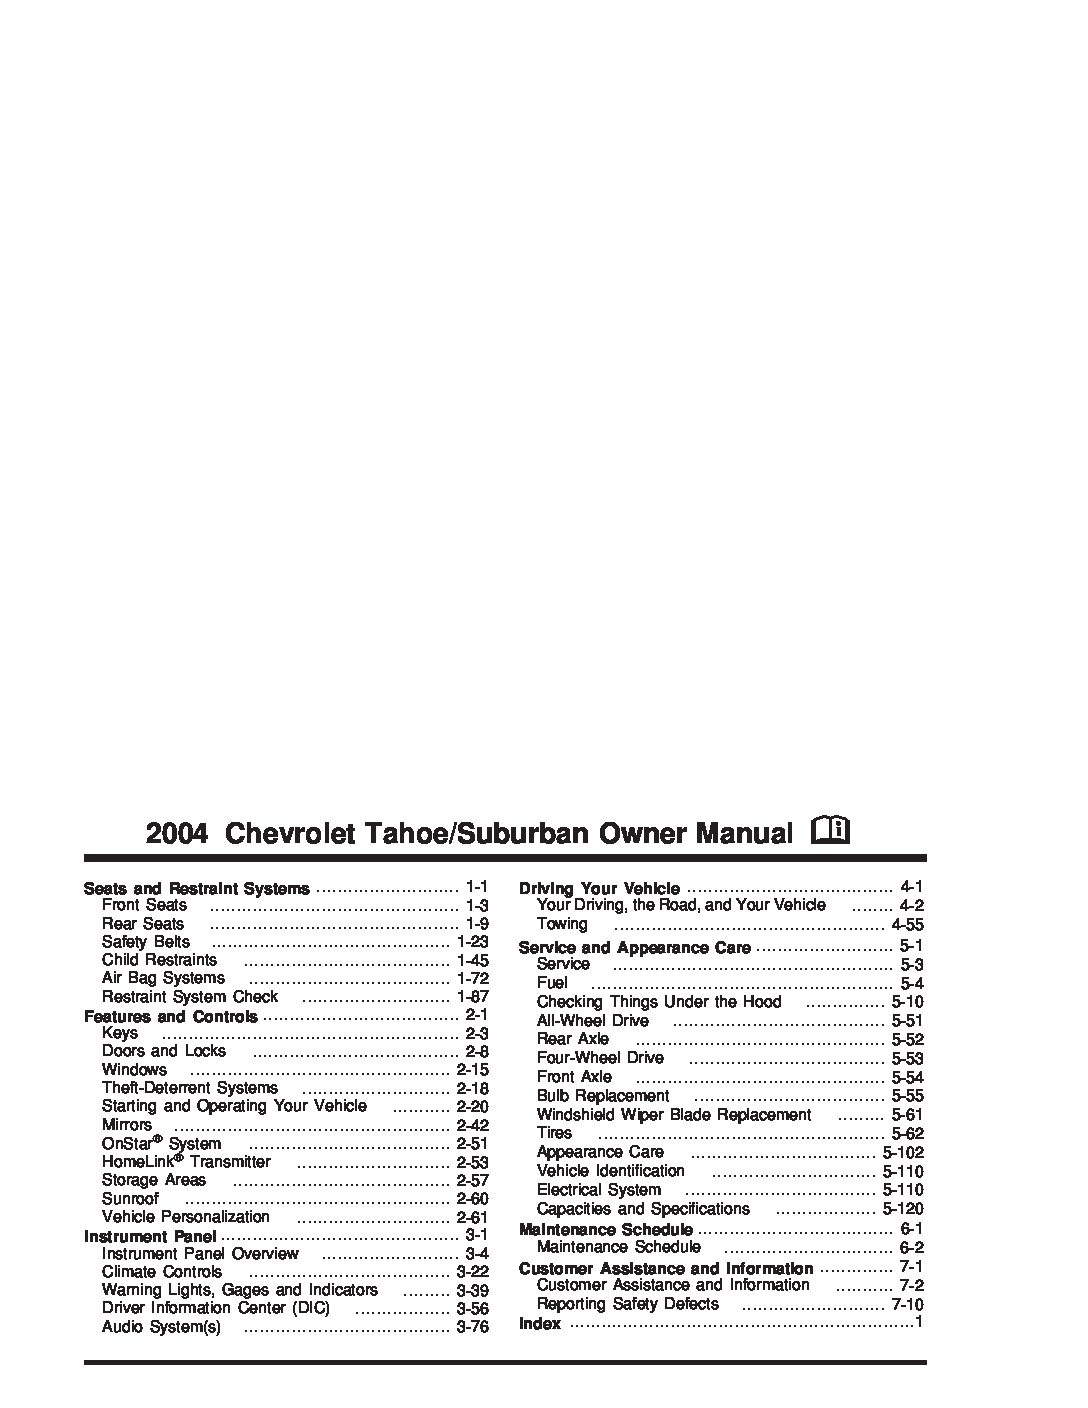 2004 chevrolet tahoe manual